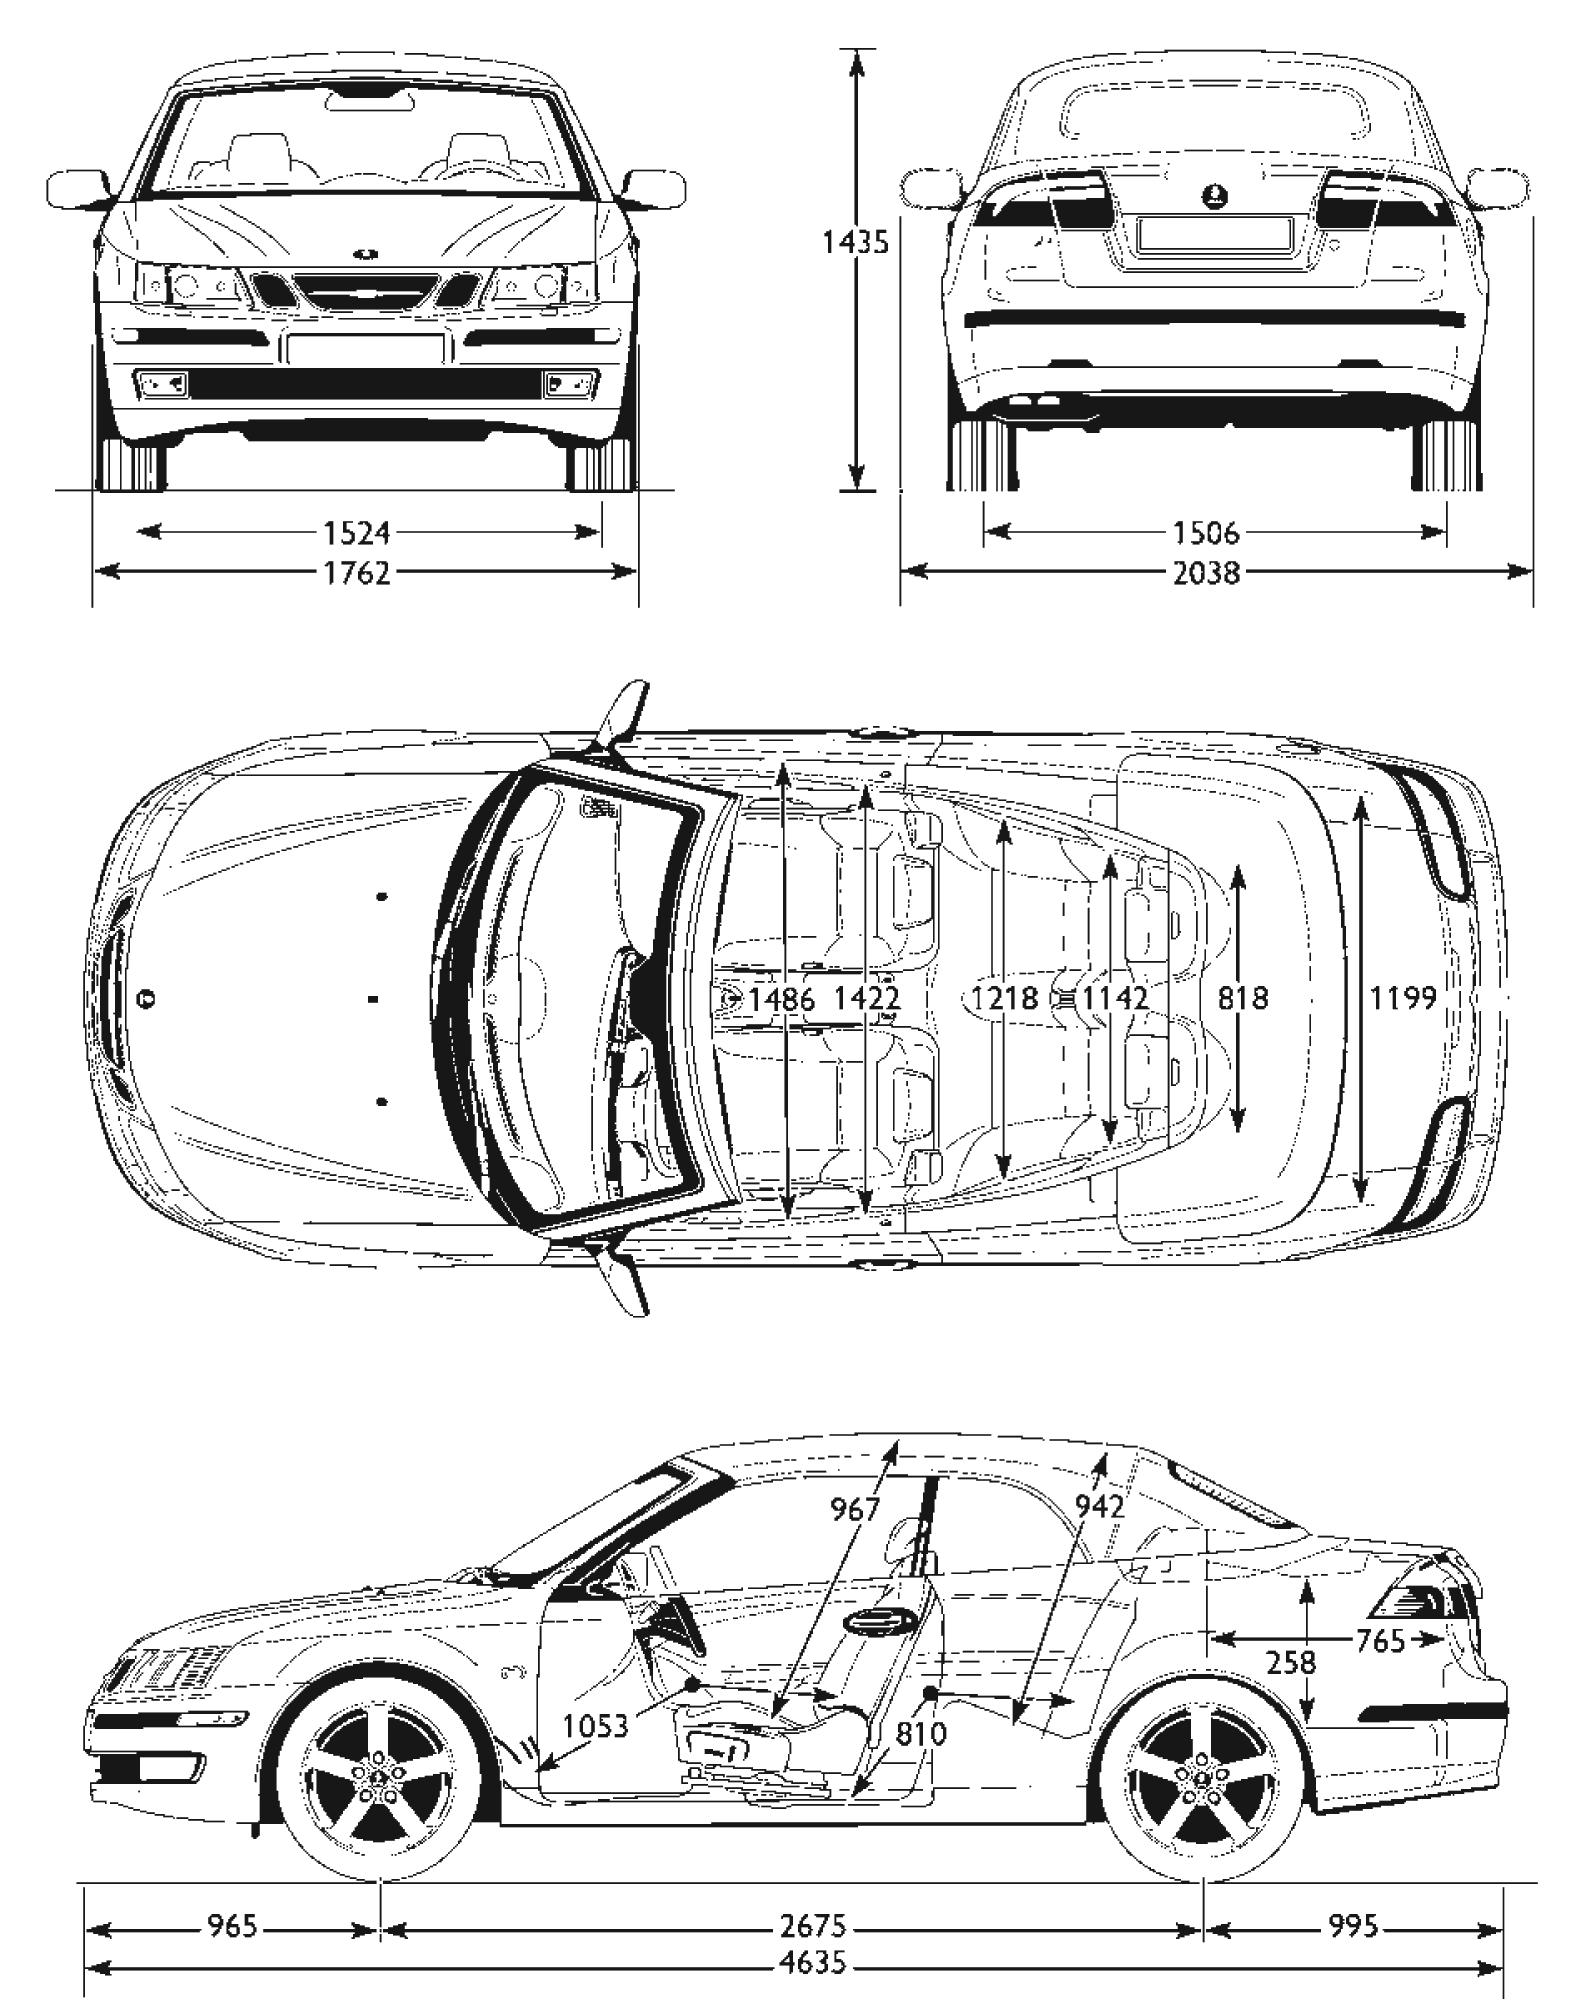 Saab 9-3 Convertible blueprints